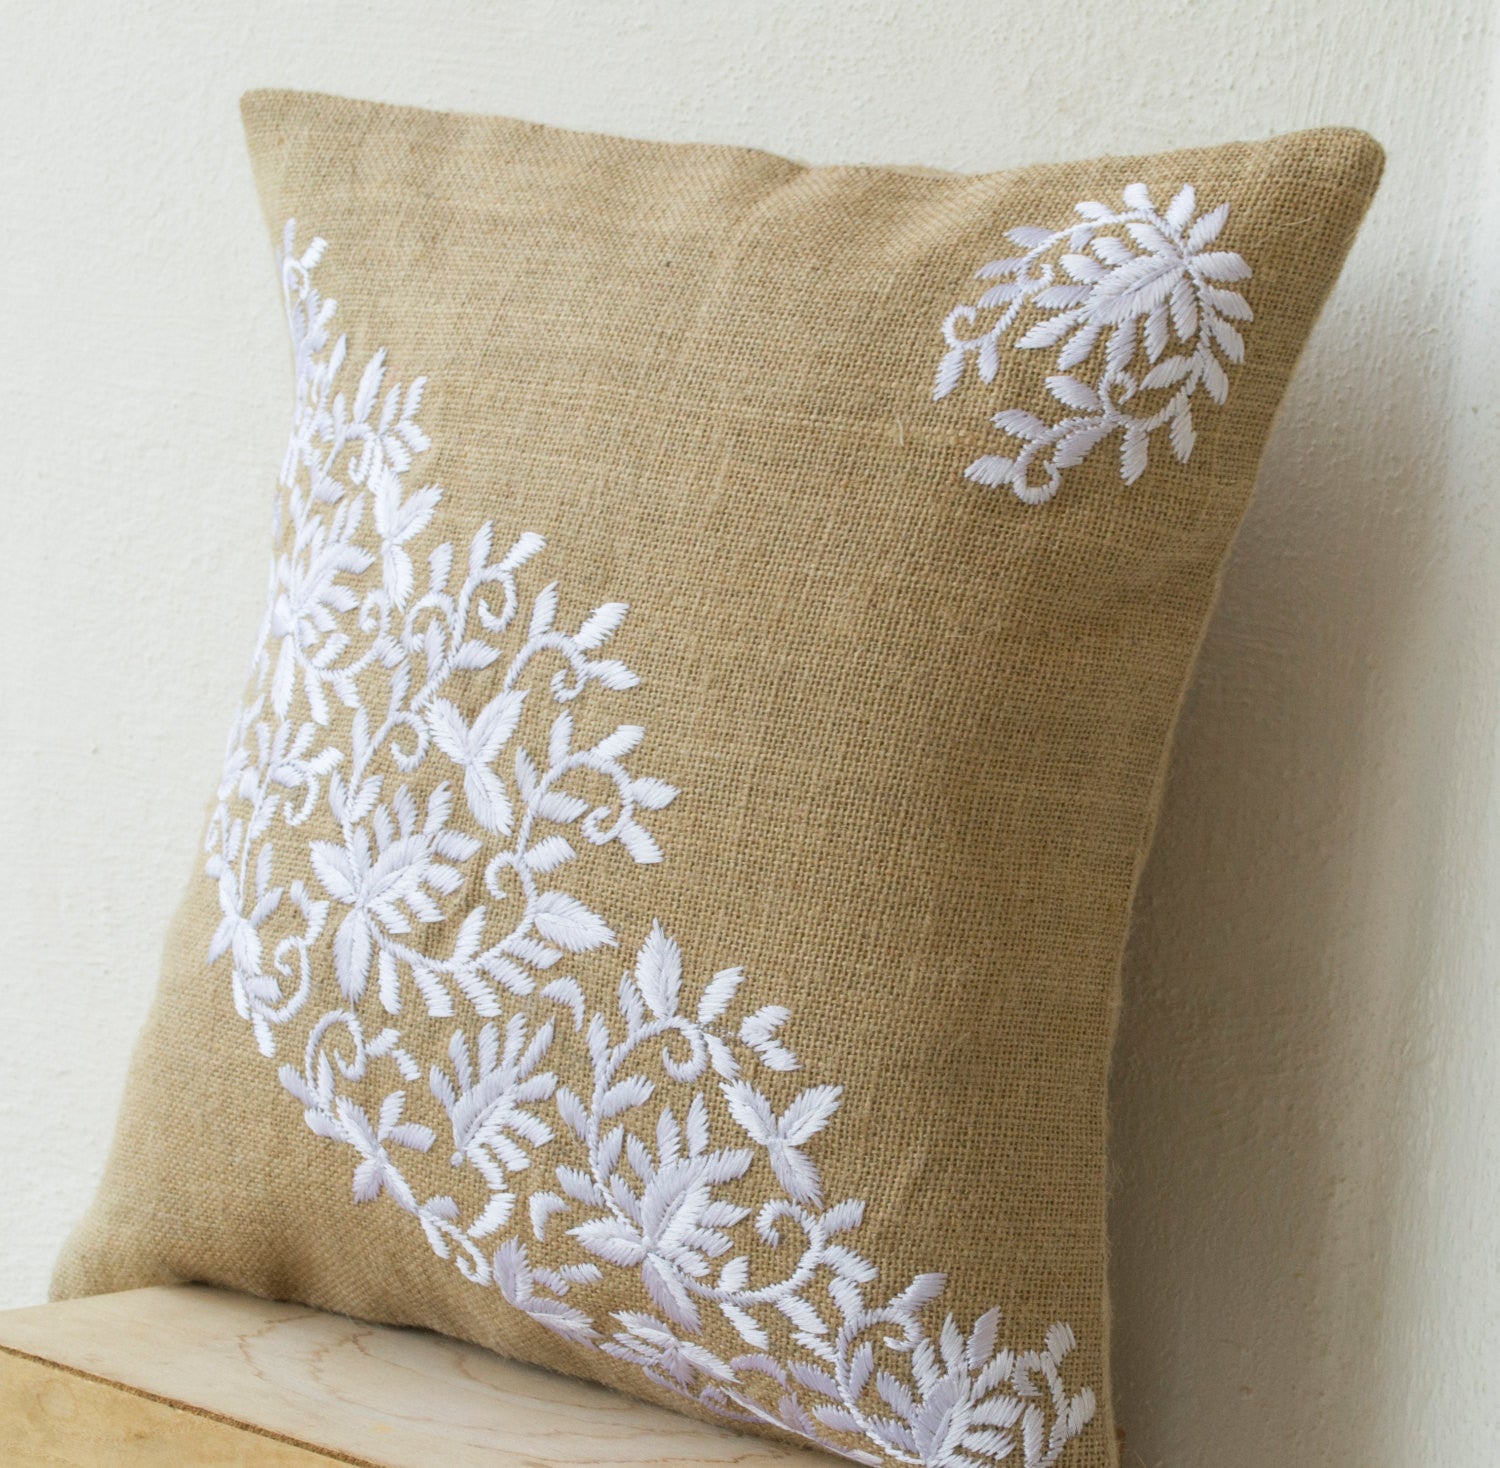 Shop online for handmade burlap ivory pillows with custom monogram